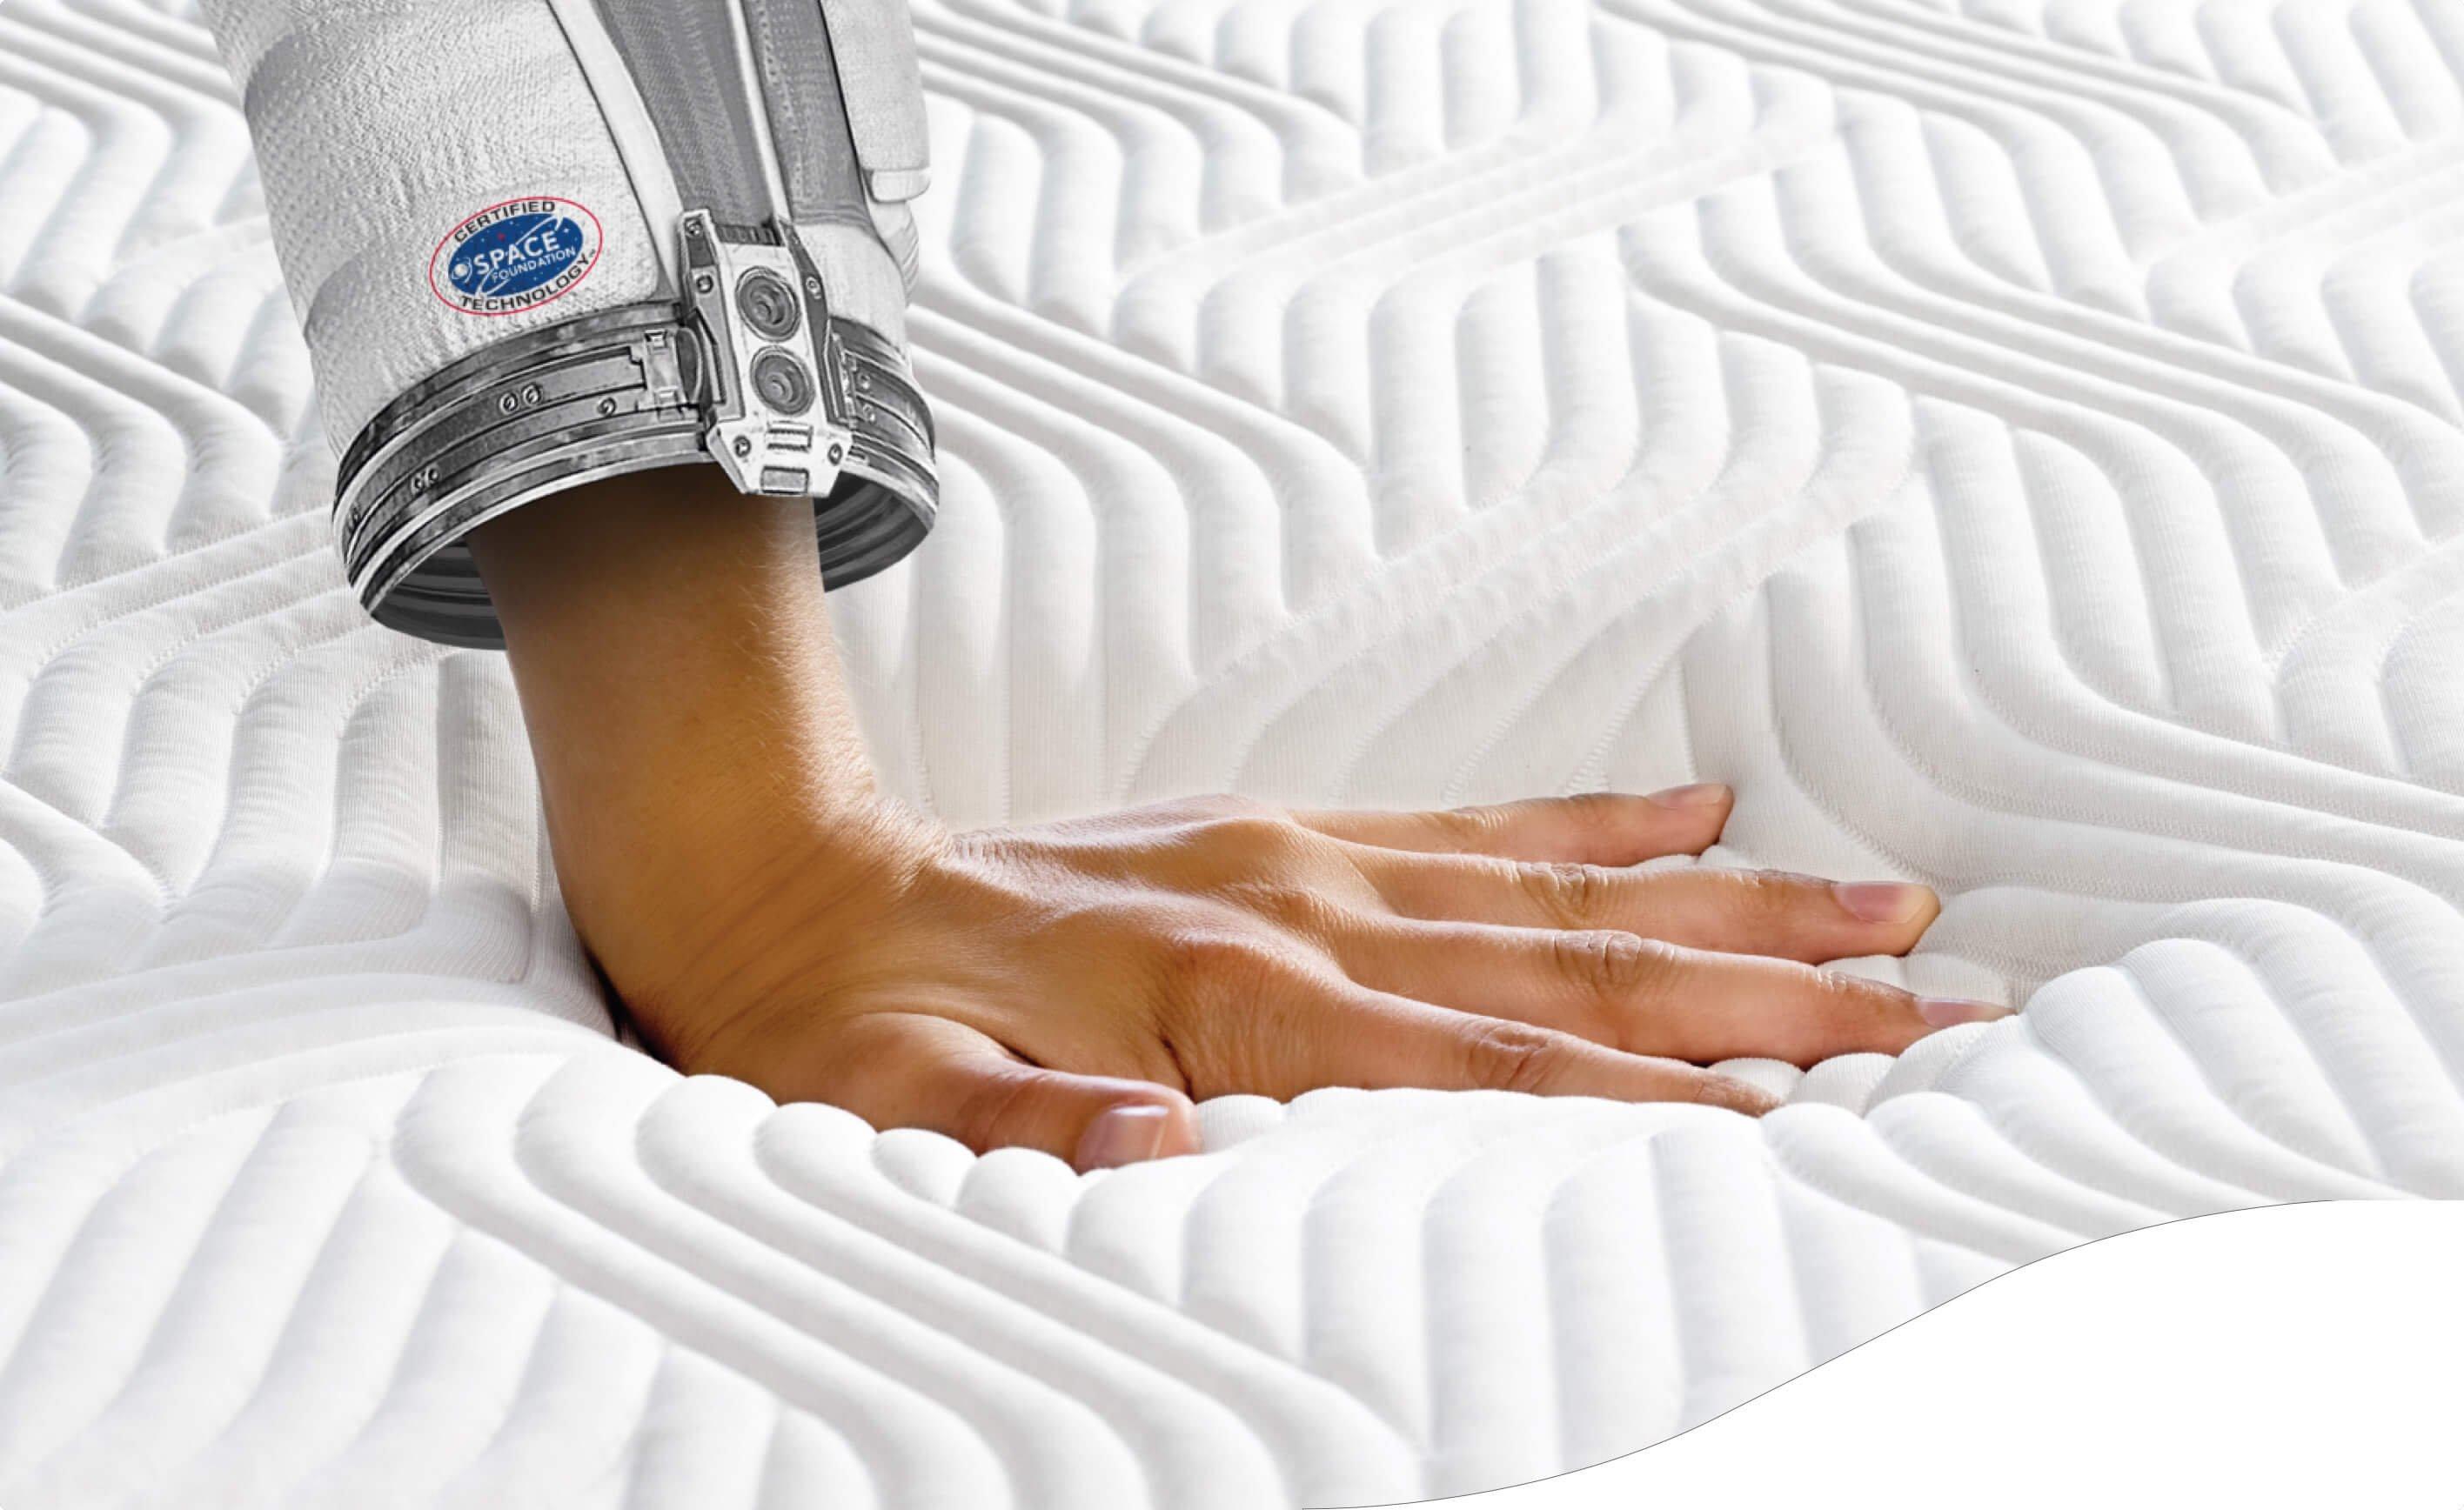 NASA astronaut hand on Tempur mattress